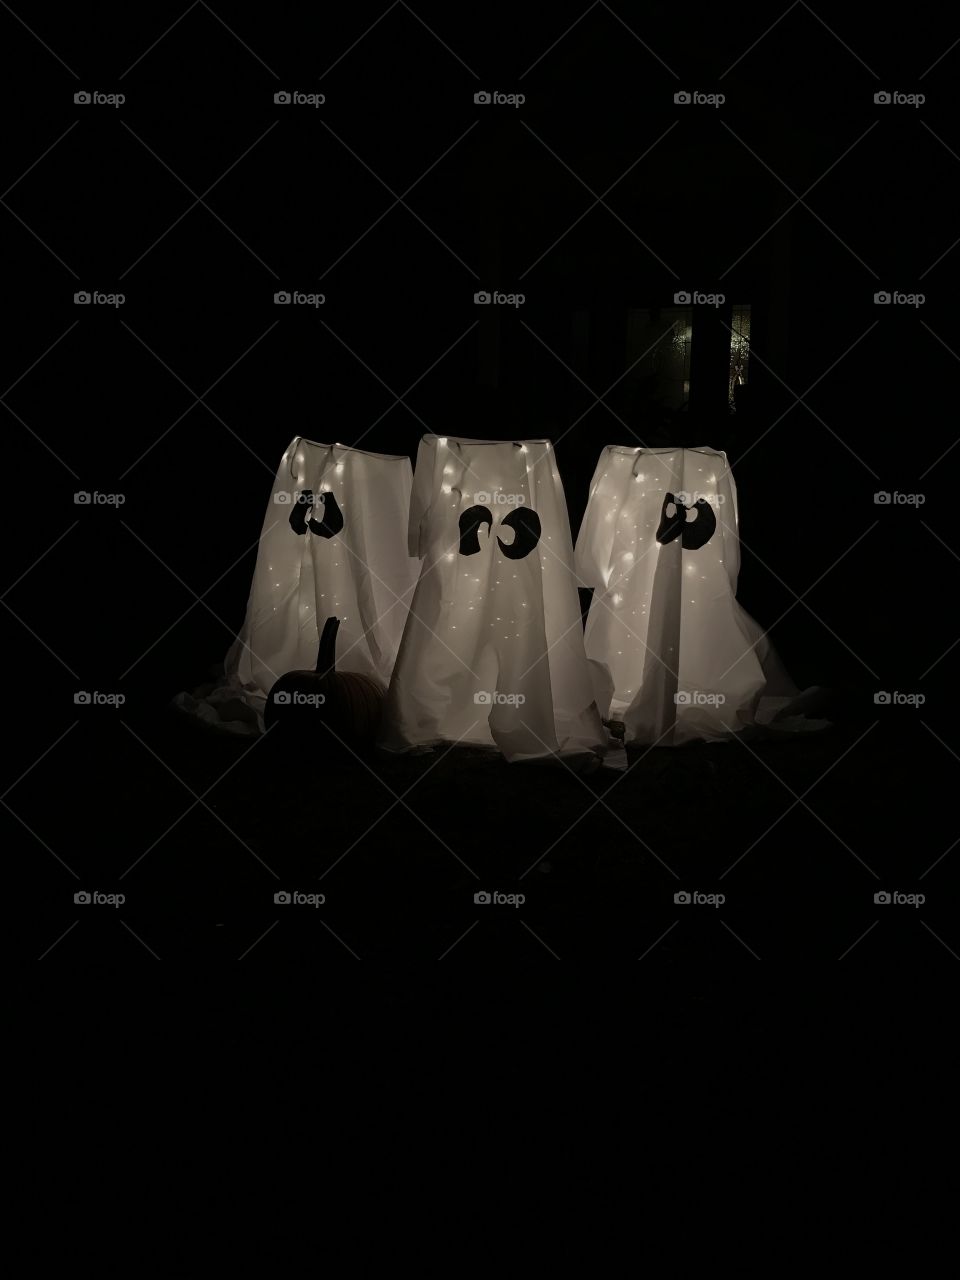 Three ghosts